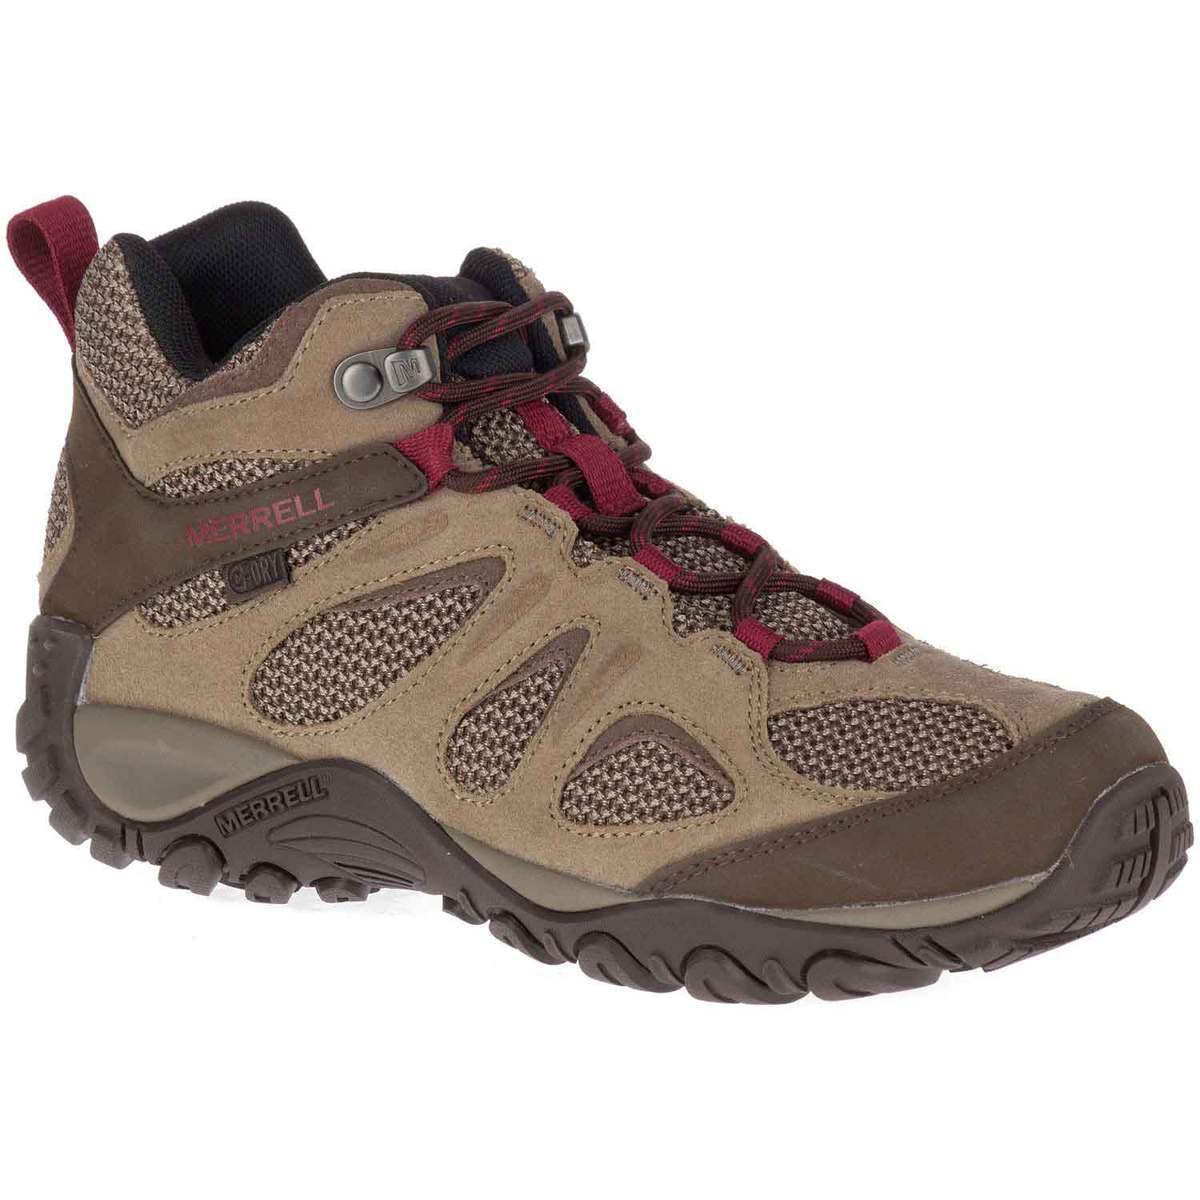 Merrell Women's Yokota Waterproof Mid Hiking Boots - Brindle - Size 9.5 ...